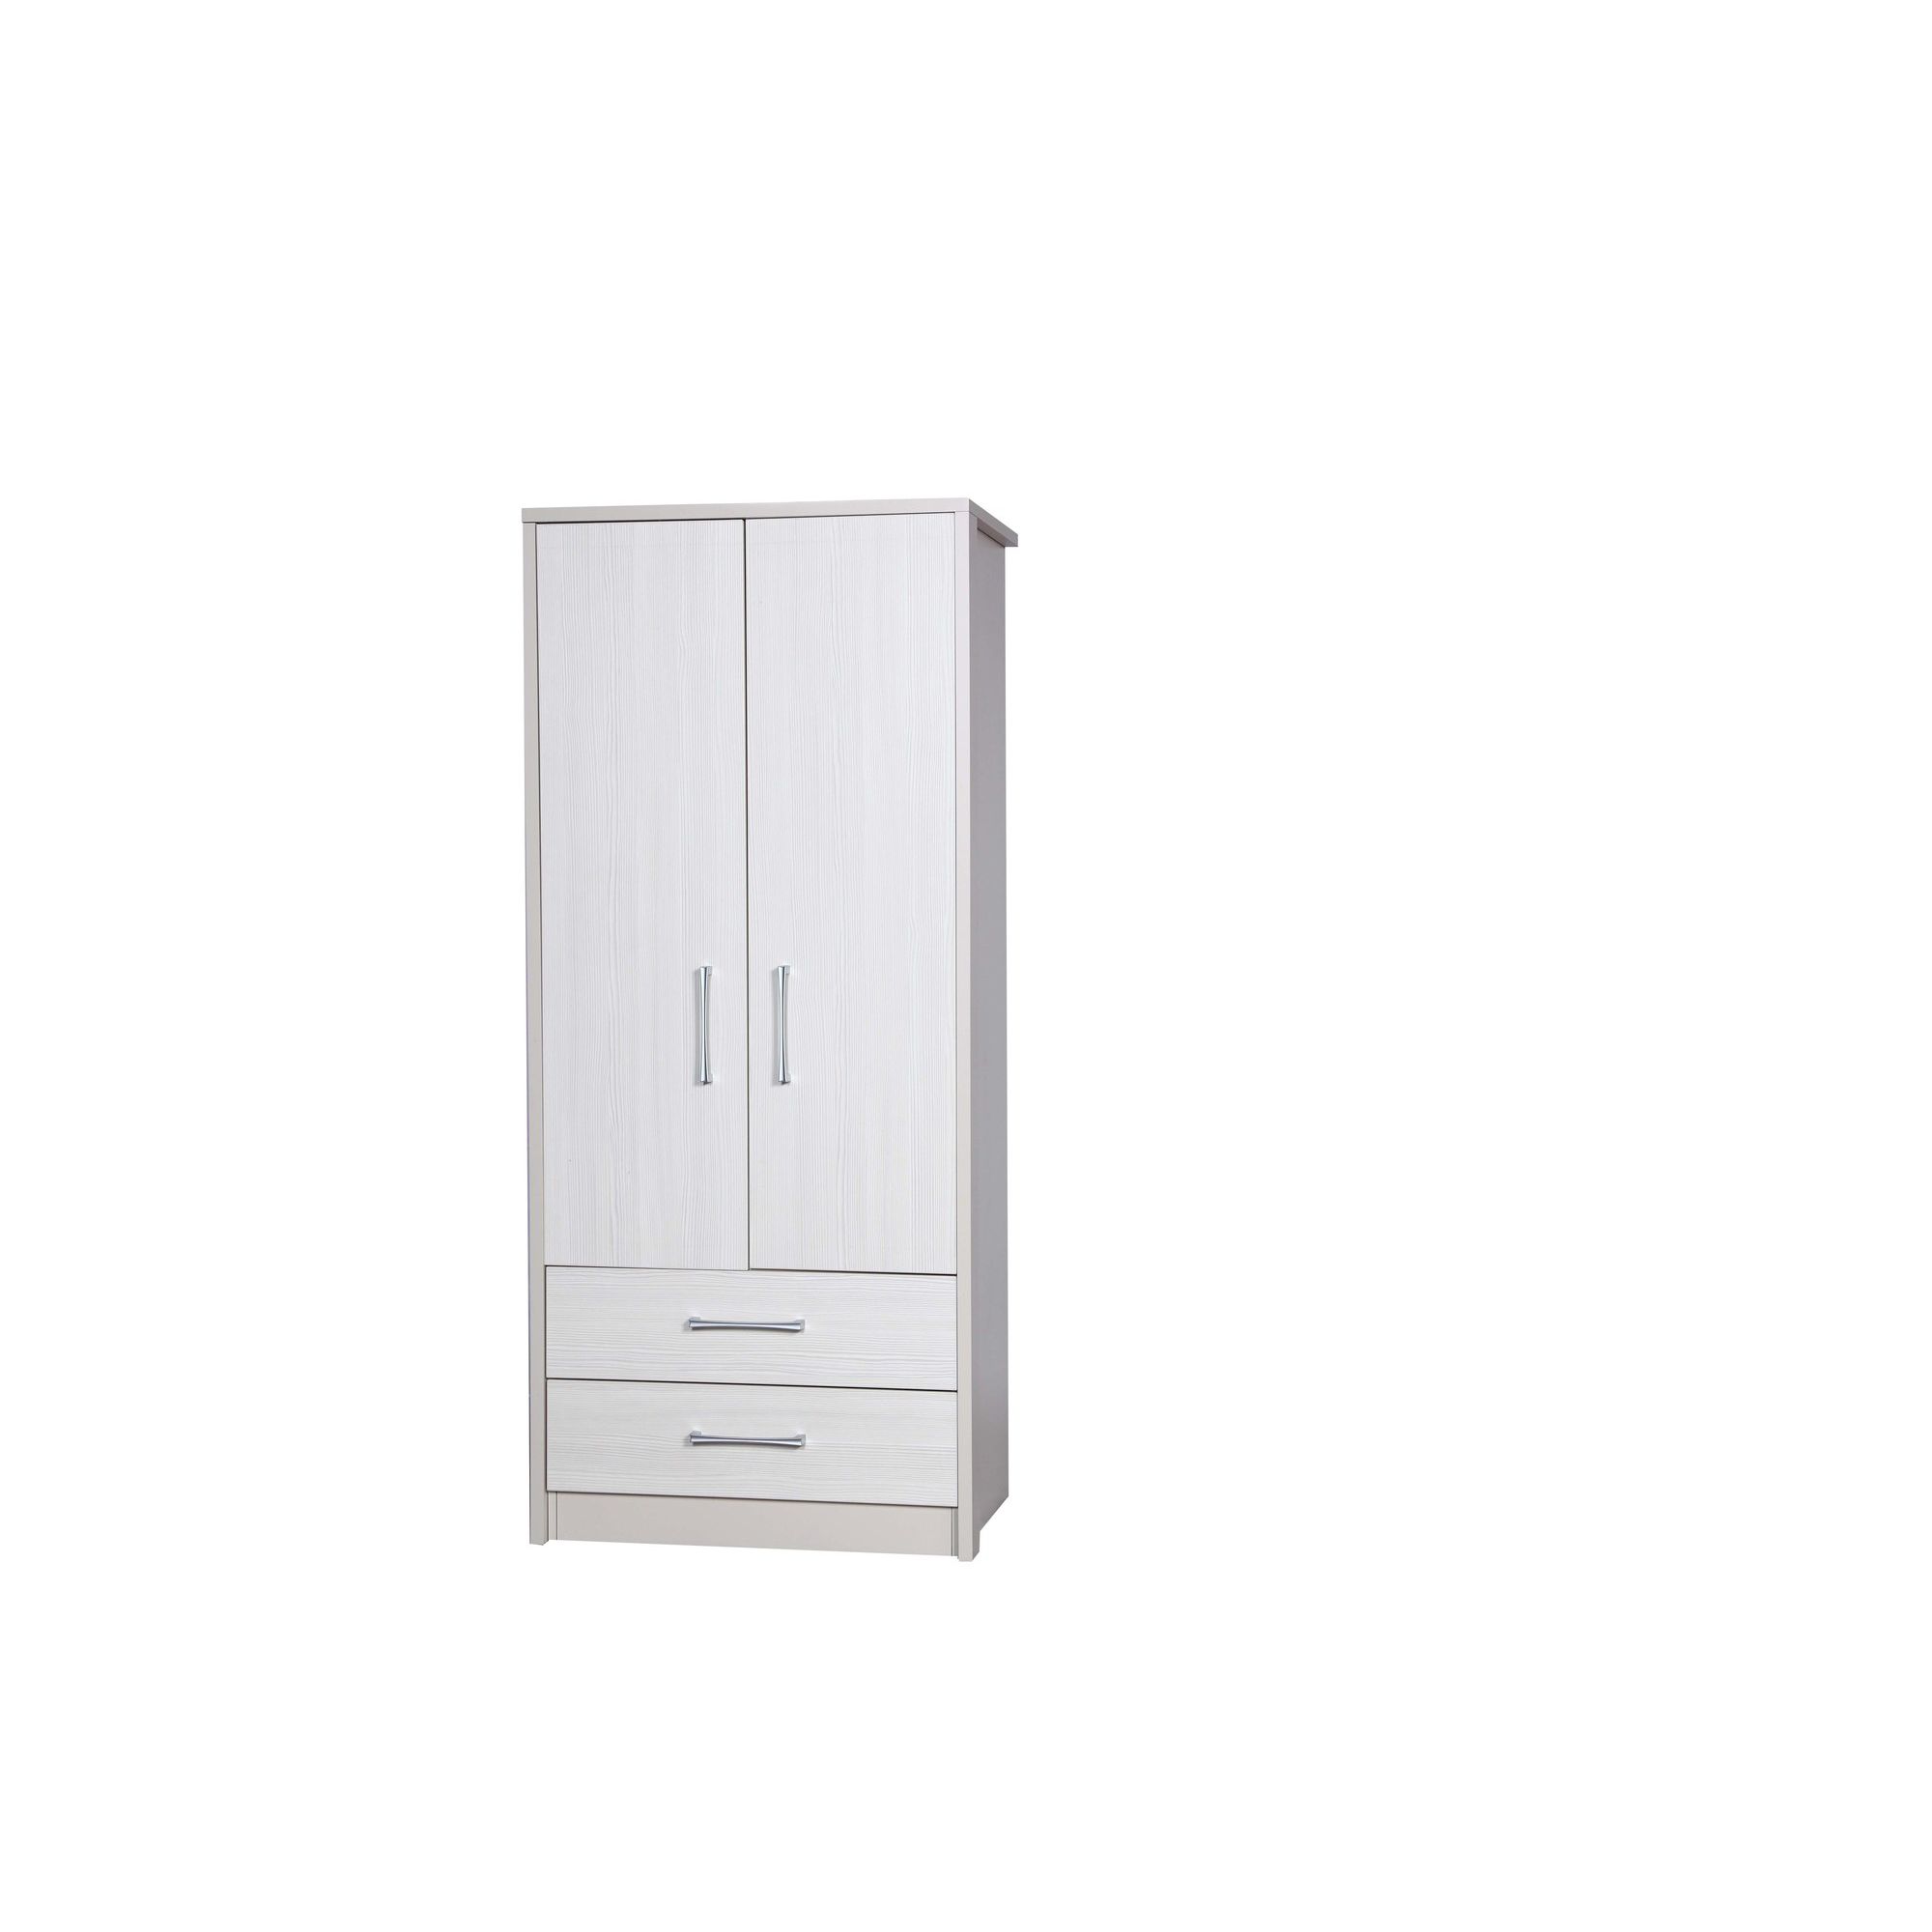 Alto Furniture Avola 2 Drawer Combi Wardrobe - Cream Carcass With White Avola at Tesco Direct